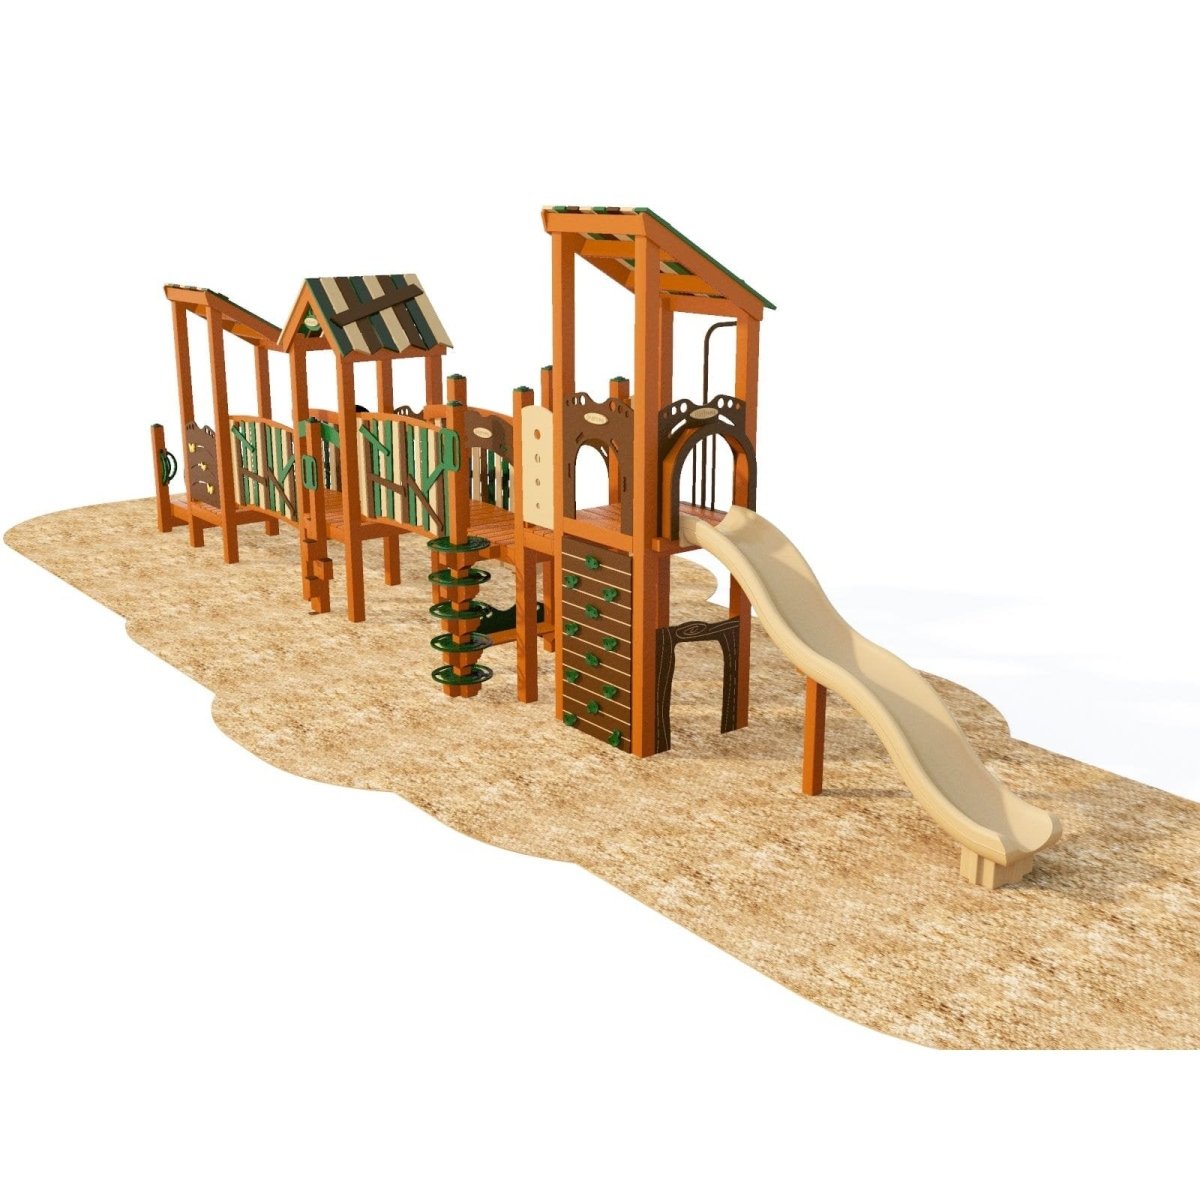 Mossy Glen Playset - School-Age Playgrounds - Playtopia, Inc.